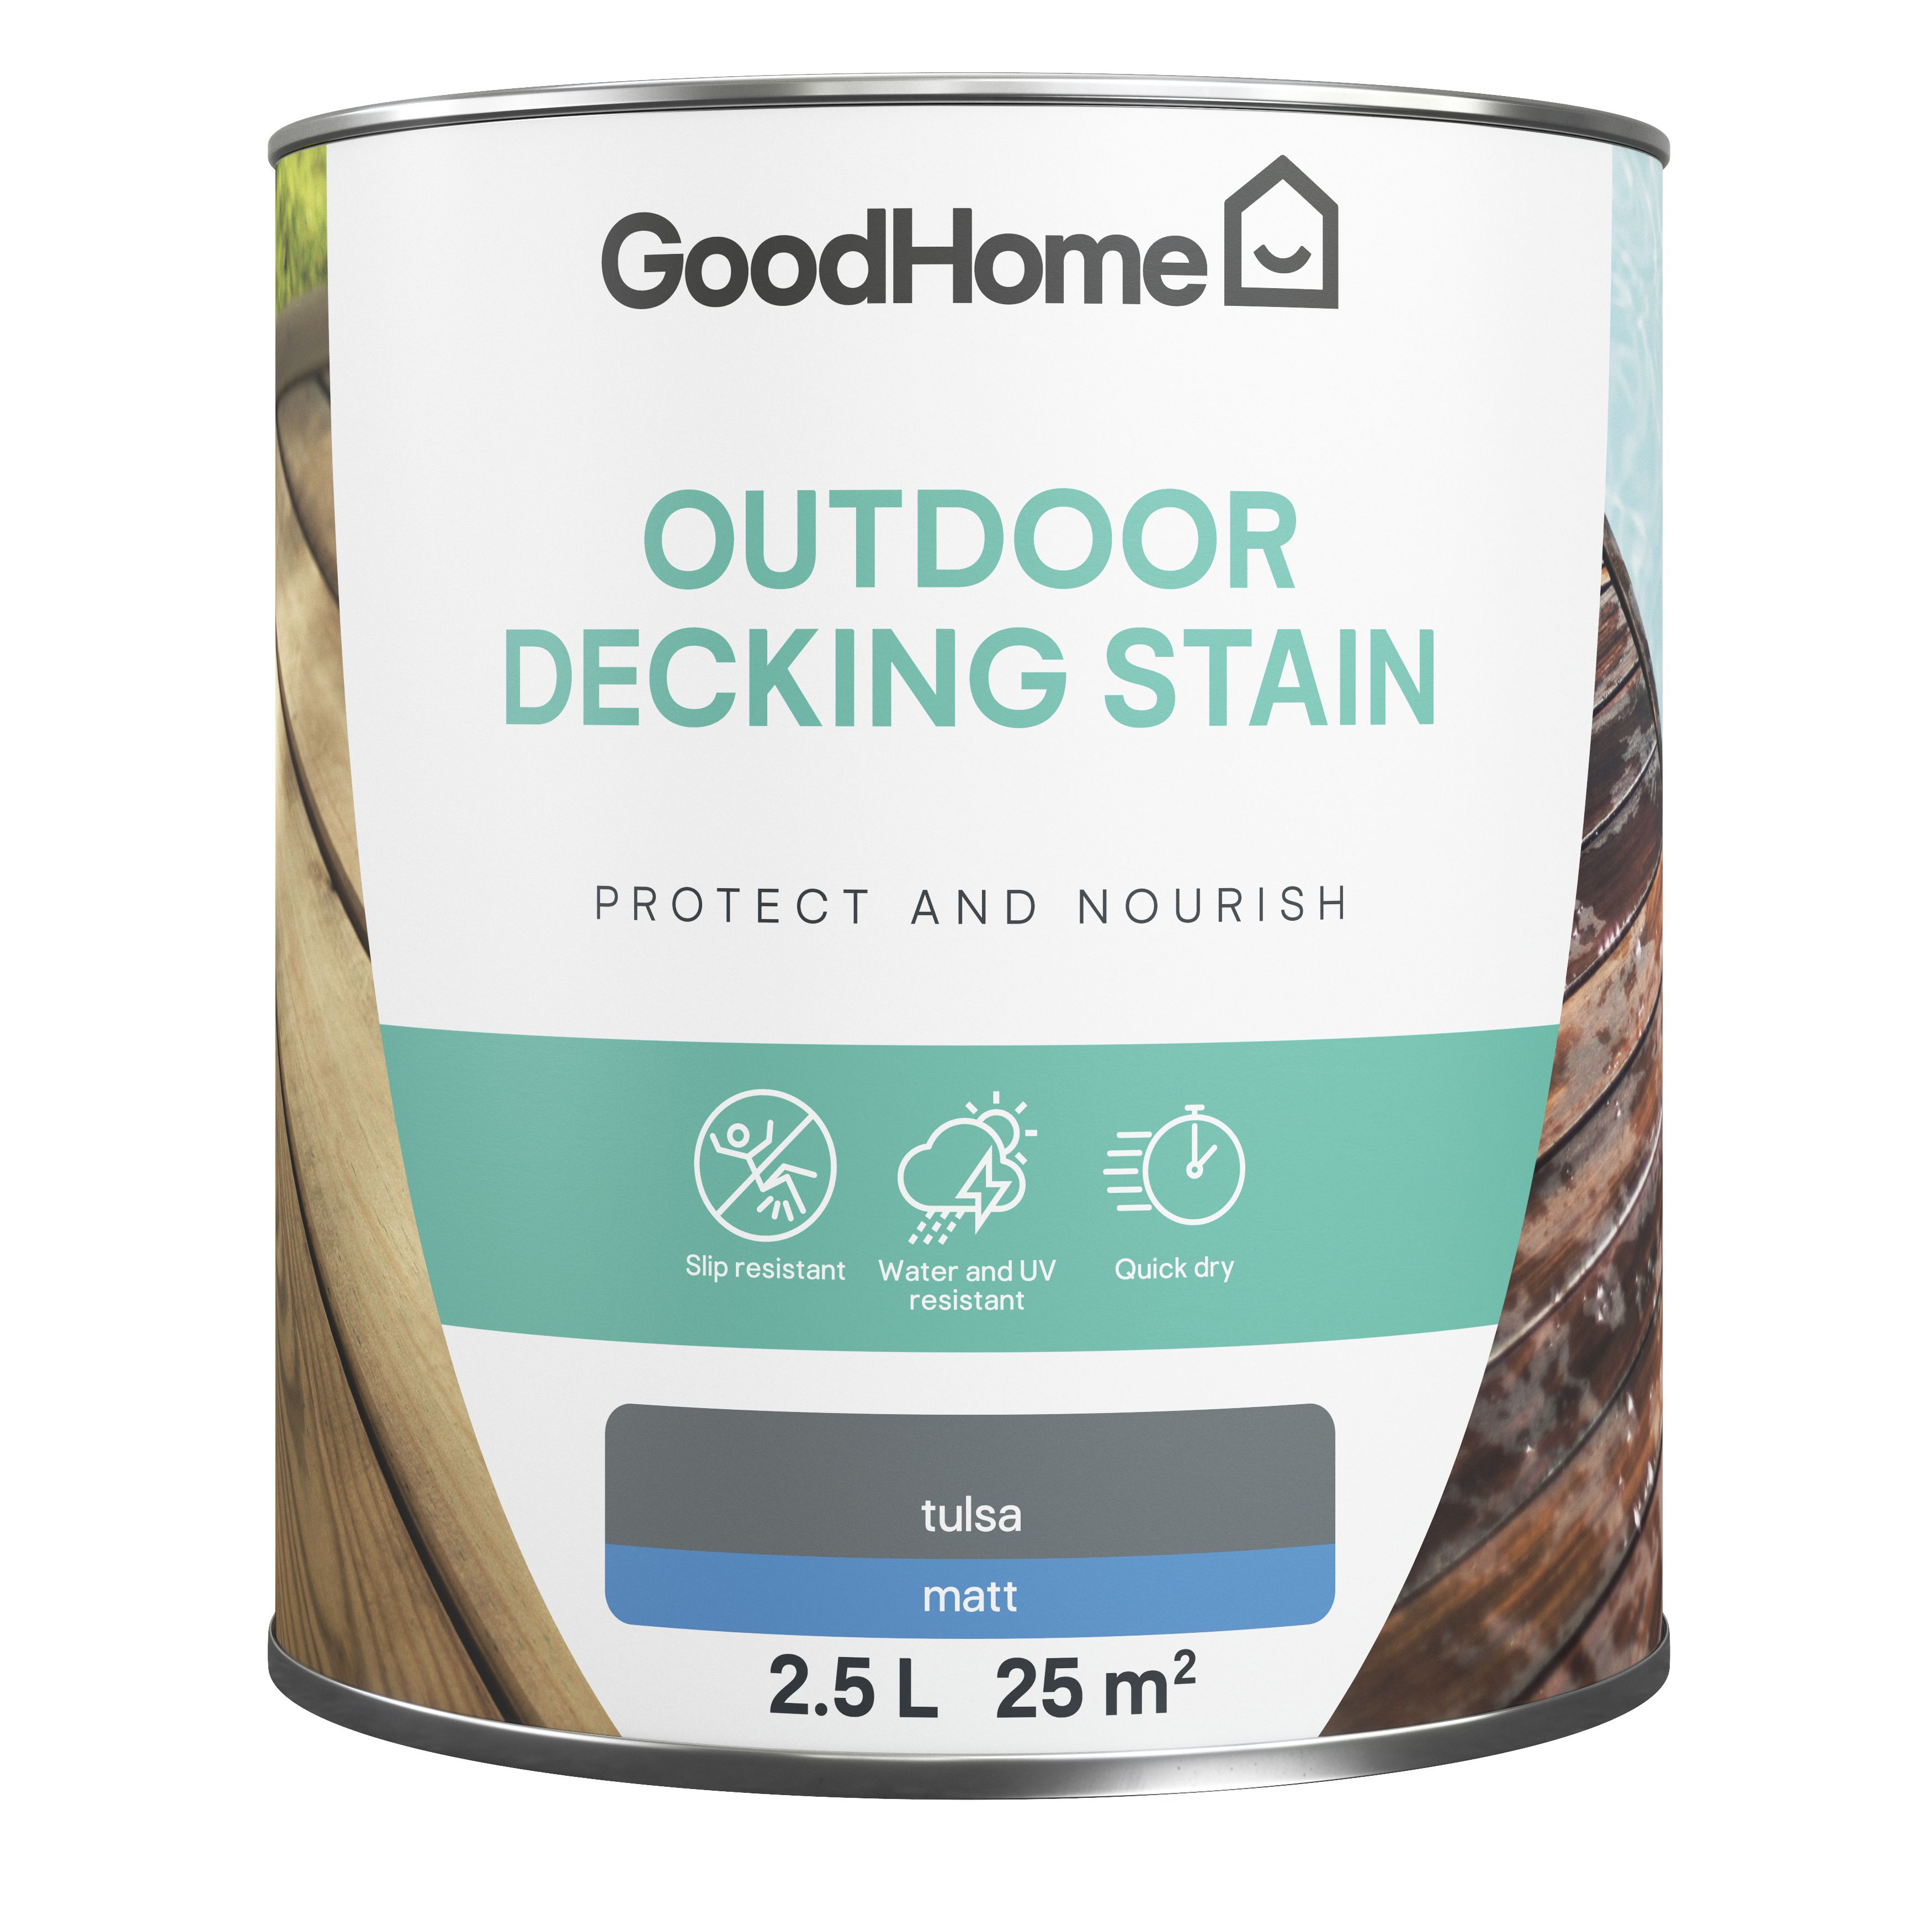 GoodHome Tulsa Matt Quick dry Decking Wood stain, 2.5L